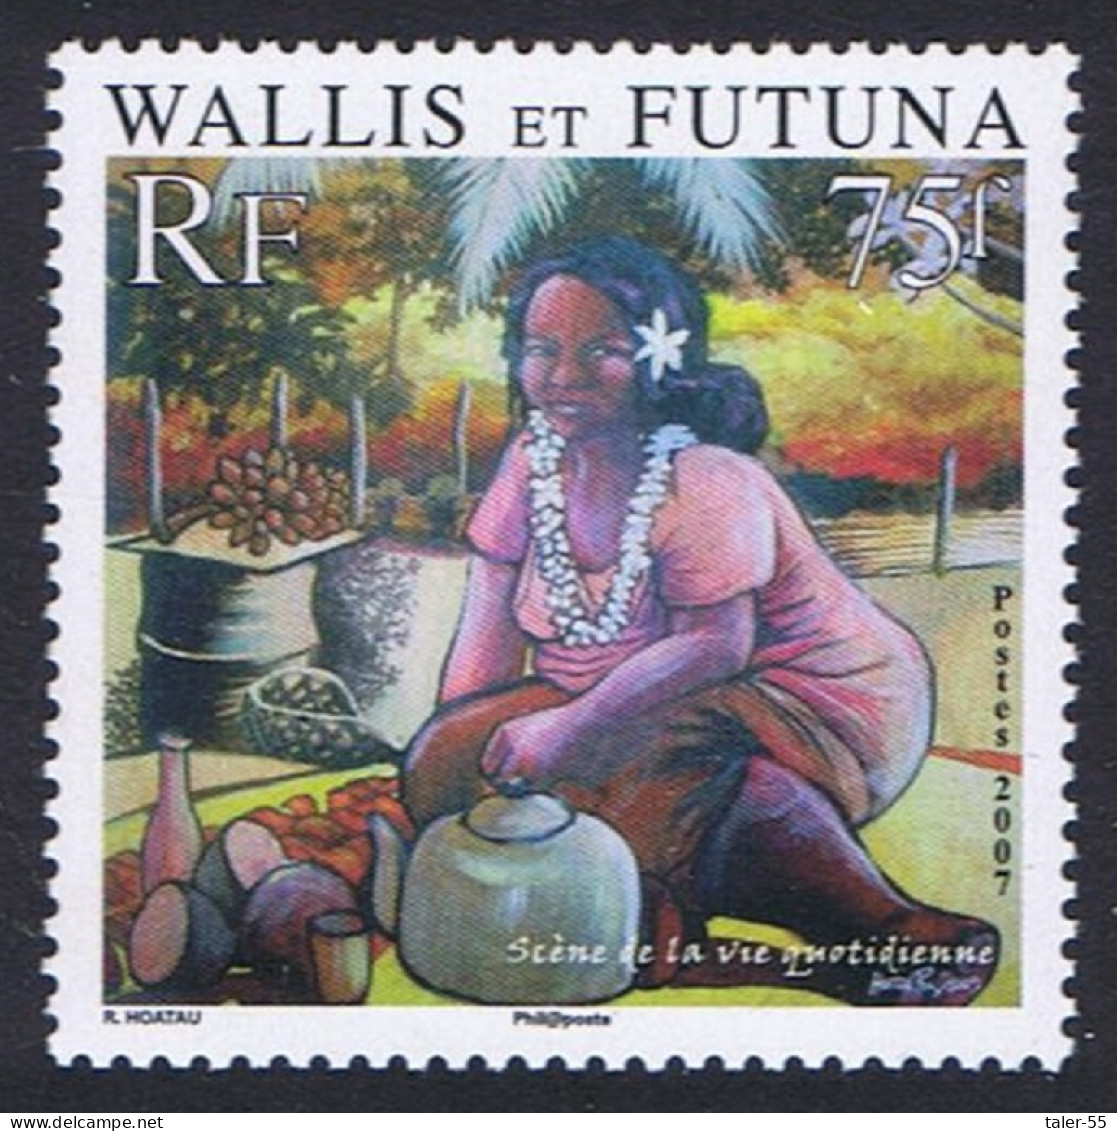 Wallis And Futuna Daily Life 2007 MNH SG#911 - Neufs